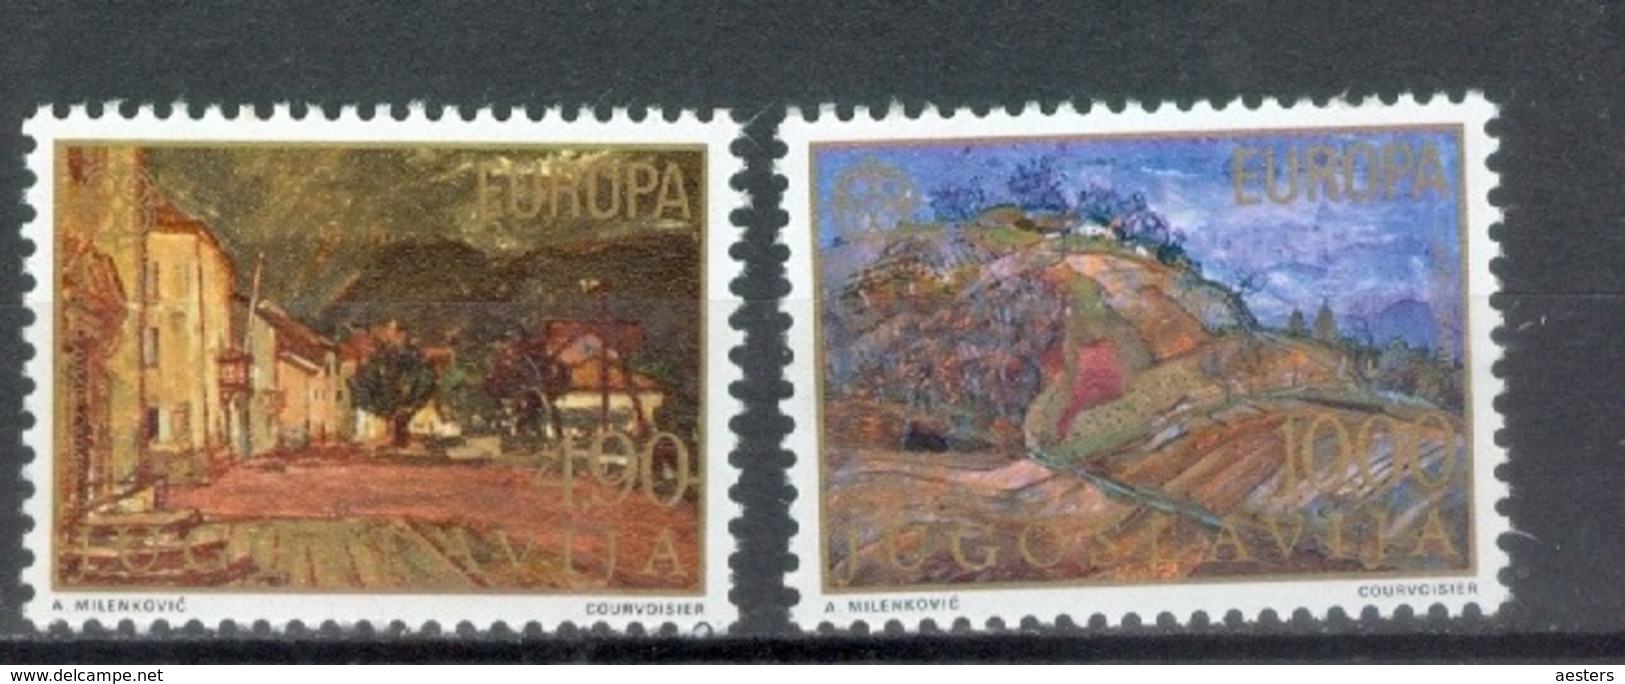 Yugoslavia 1977; Europa Cept, Michel 1684-1685.** (MNH) - 1977